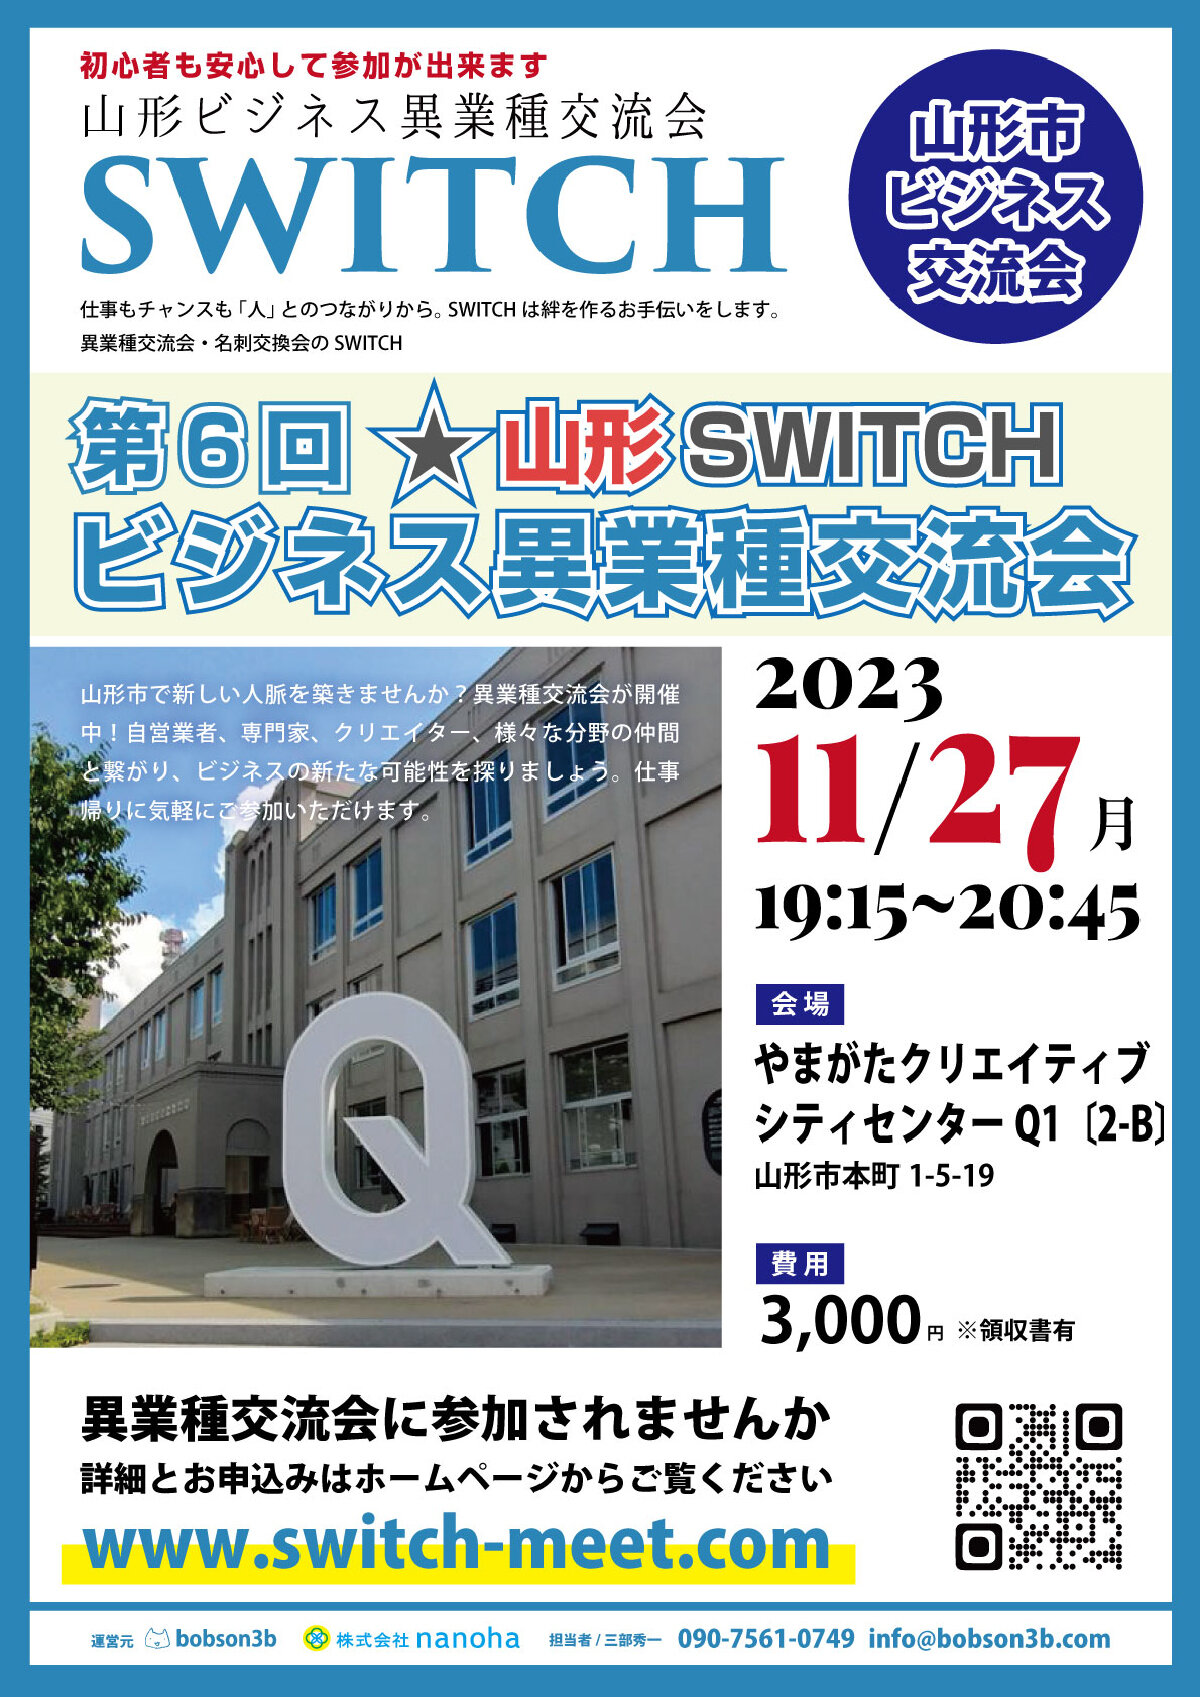 1127_switch02-02.jpg